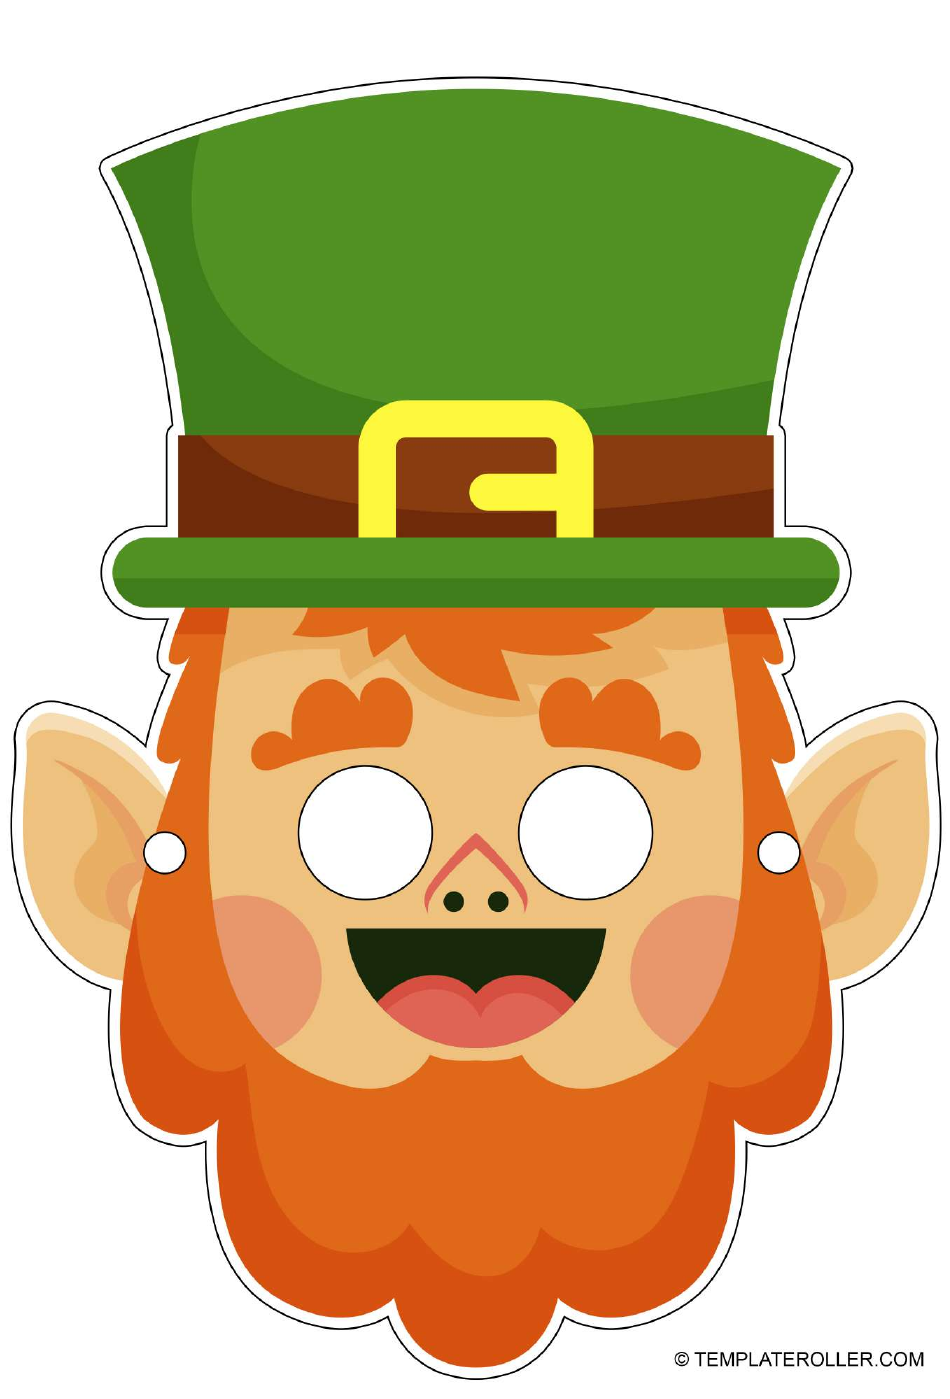 Cartoon Leprechaun Mask Template for St. Patrick's Day